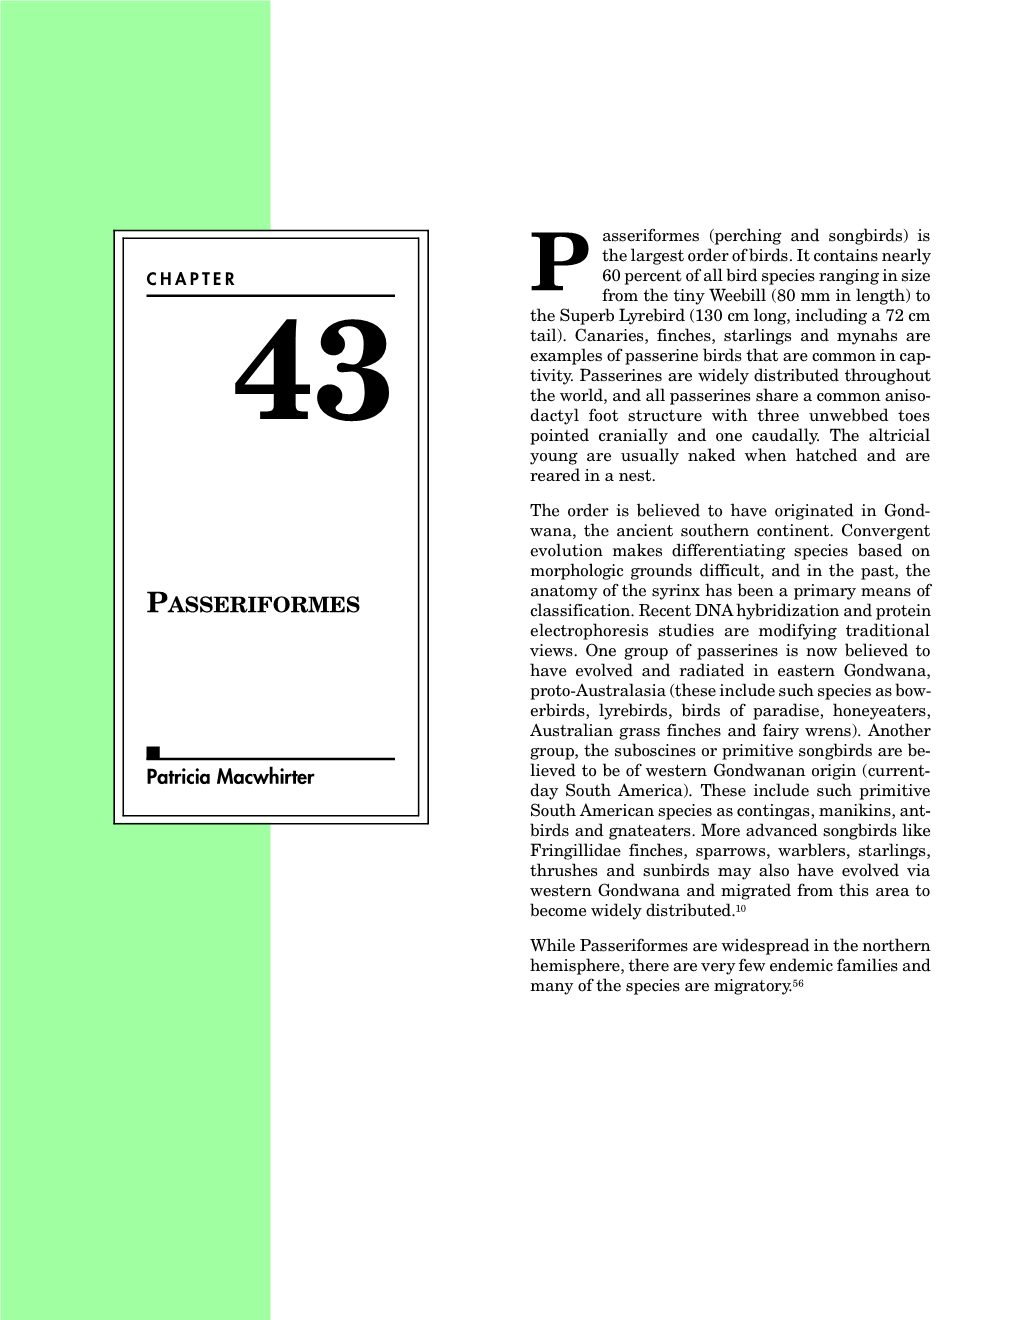 PASSERIFORMES Classification